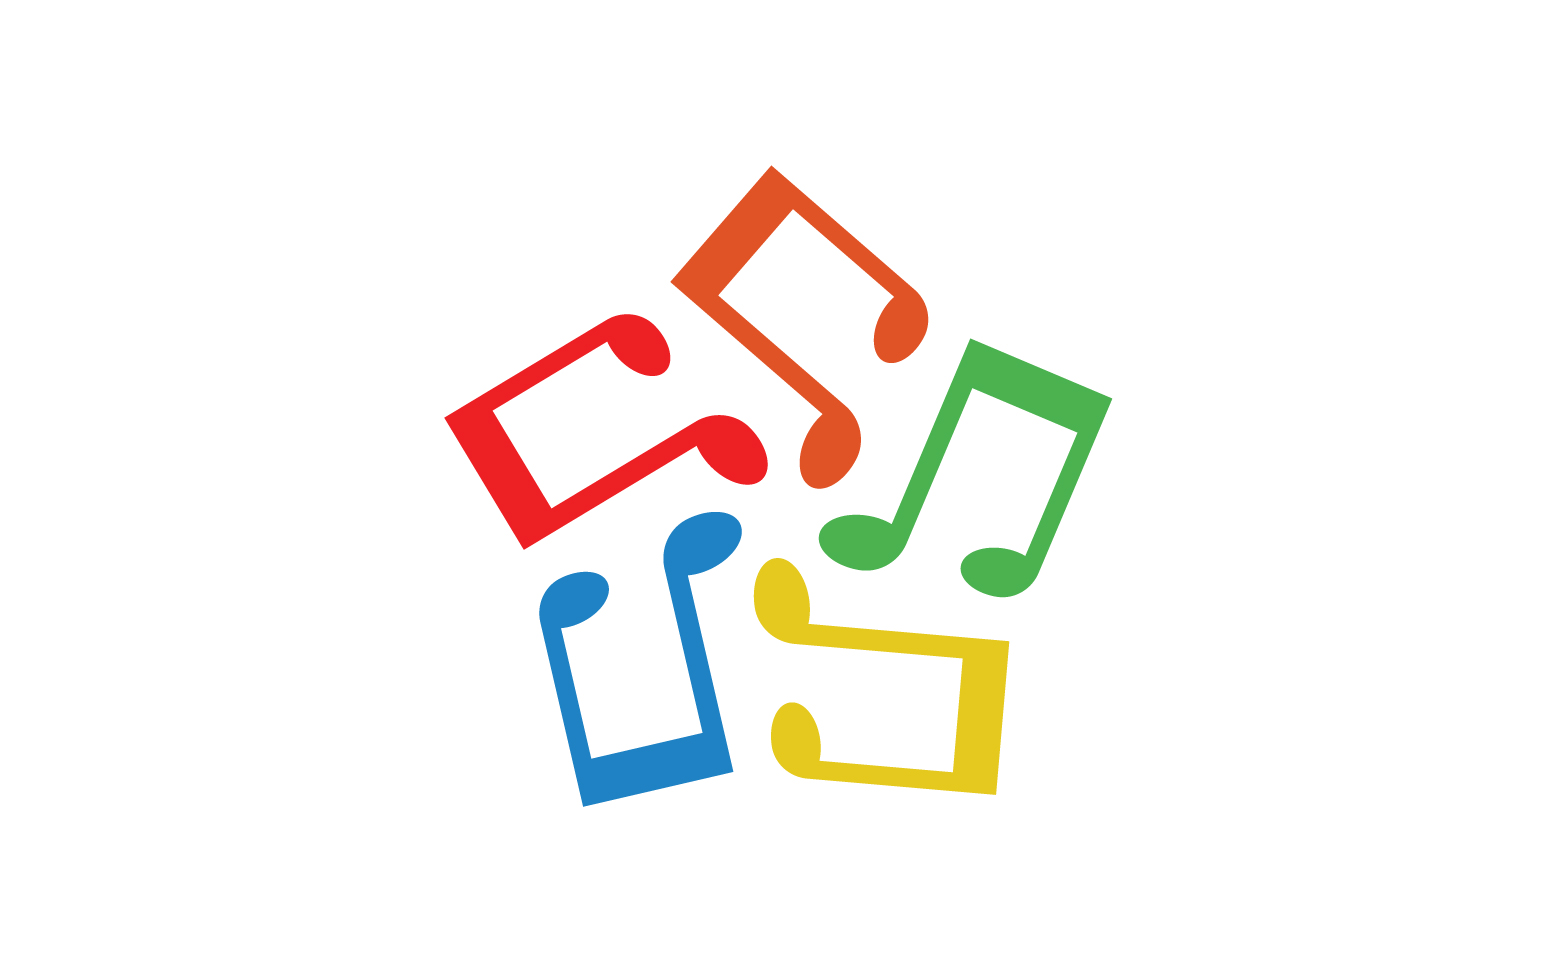 Music sound player app icon logo v.11